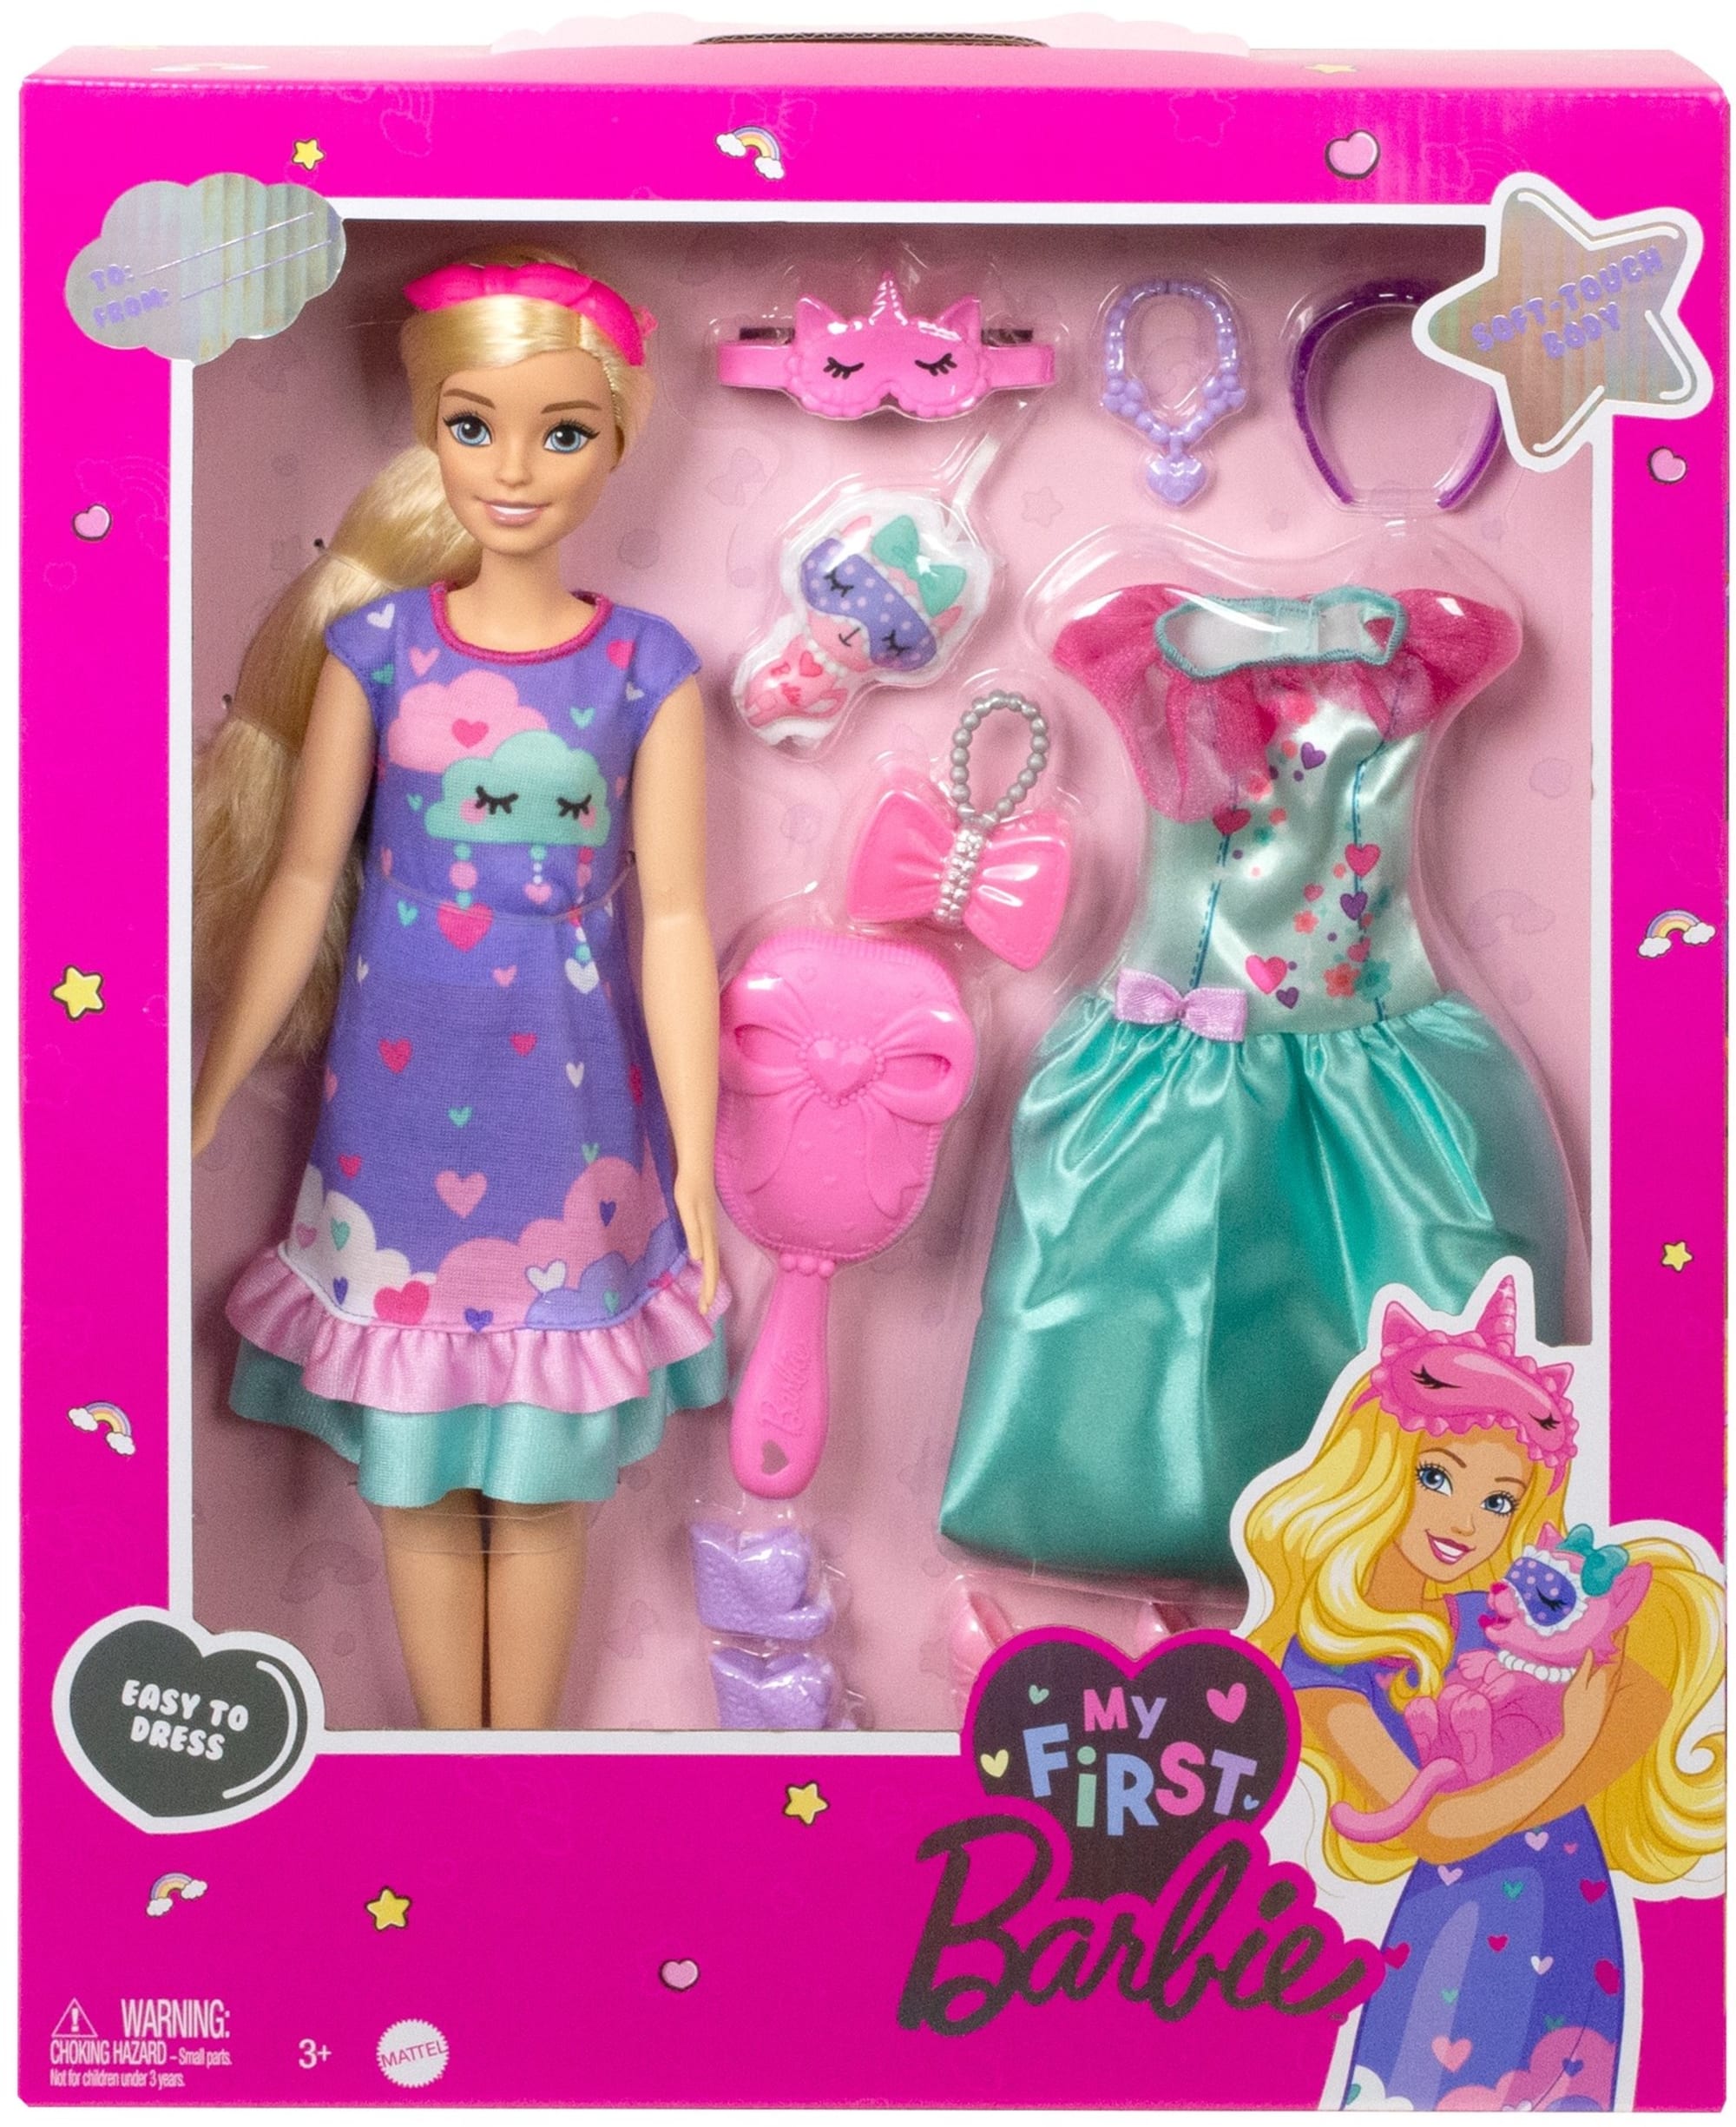 Barbie Doll For Preschoolers | Fashions | Blonde | MATTEL